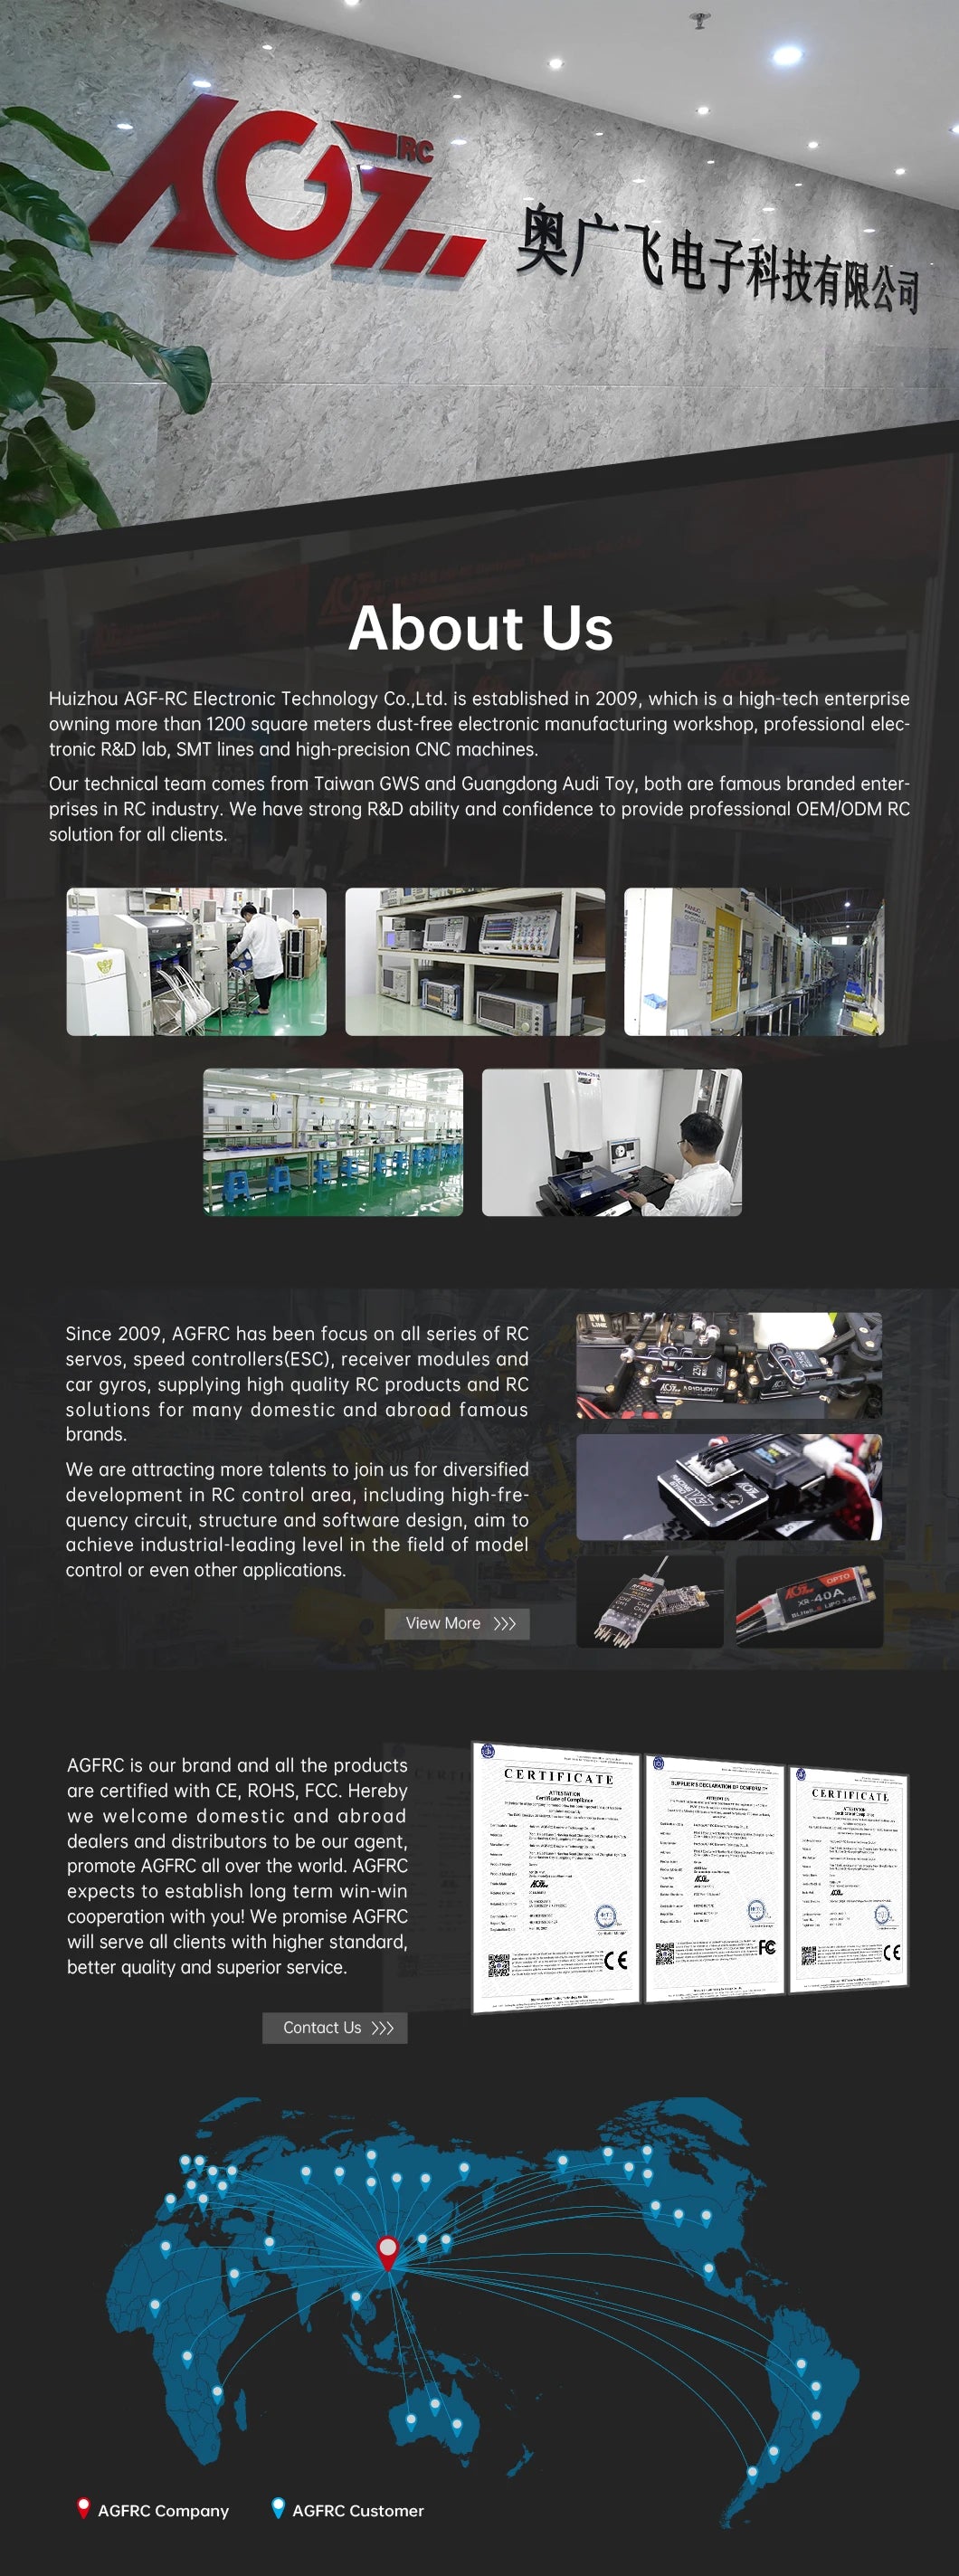 AGFRC B53BHP V2, Huizhou AGF-RC Electronic Technology Co-,Ltd. is a